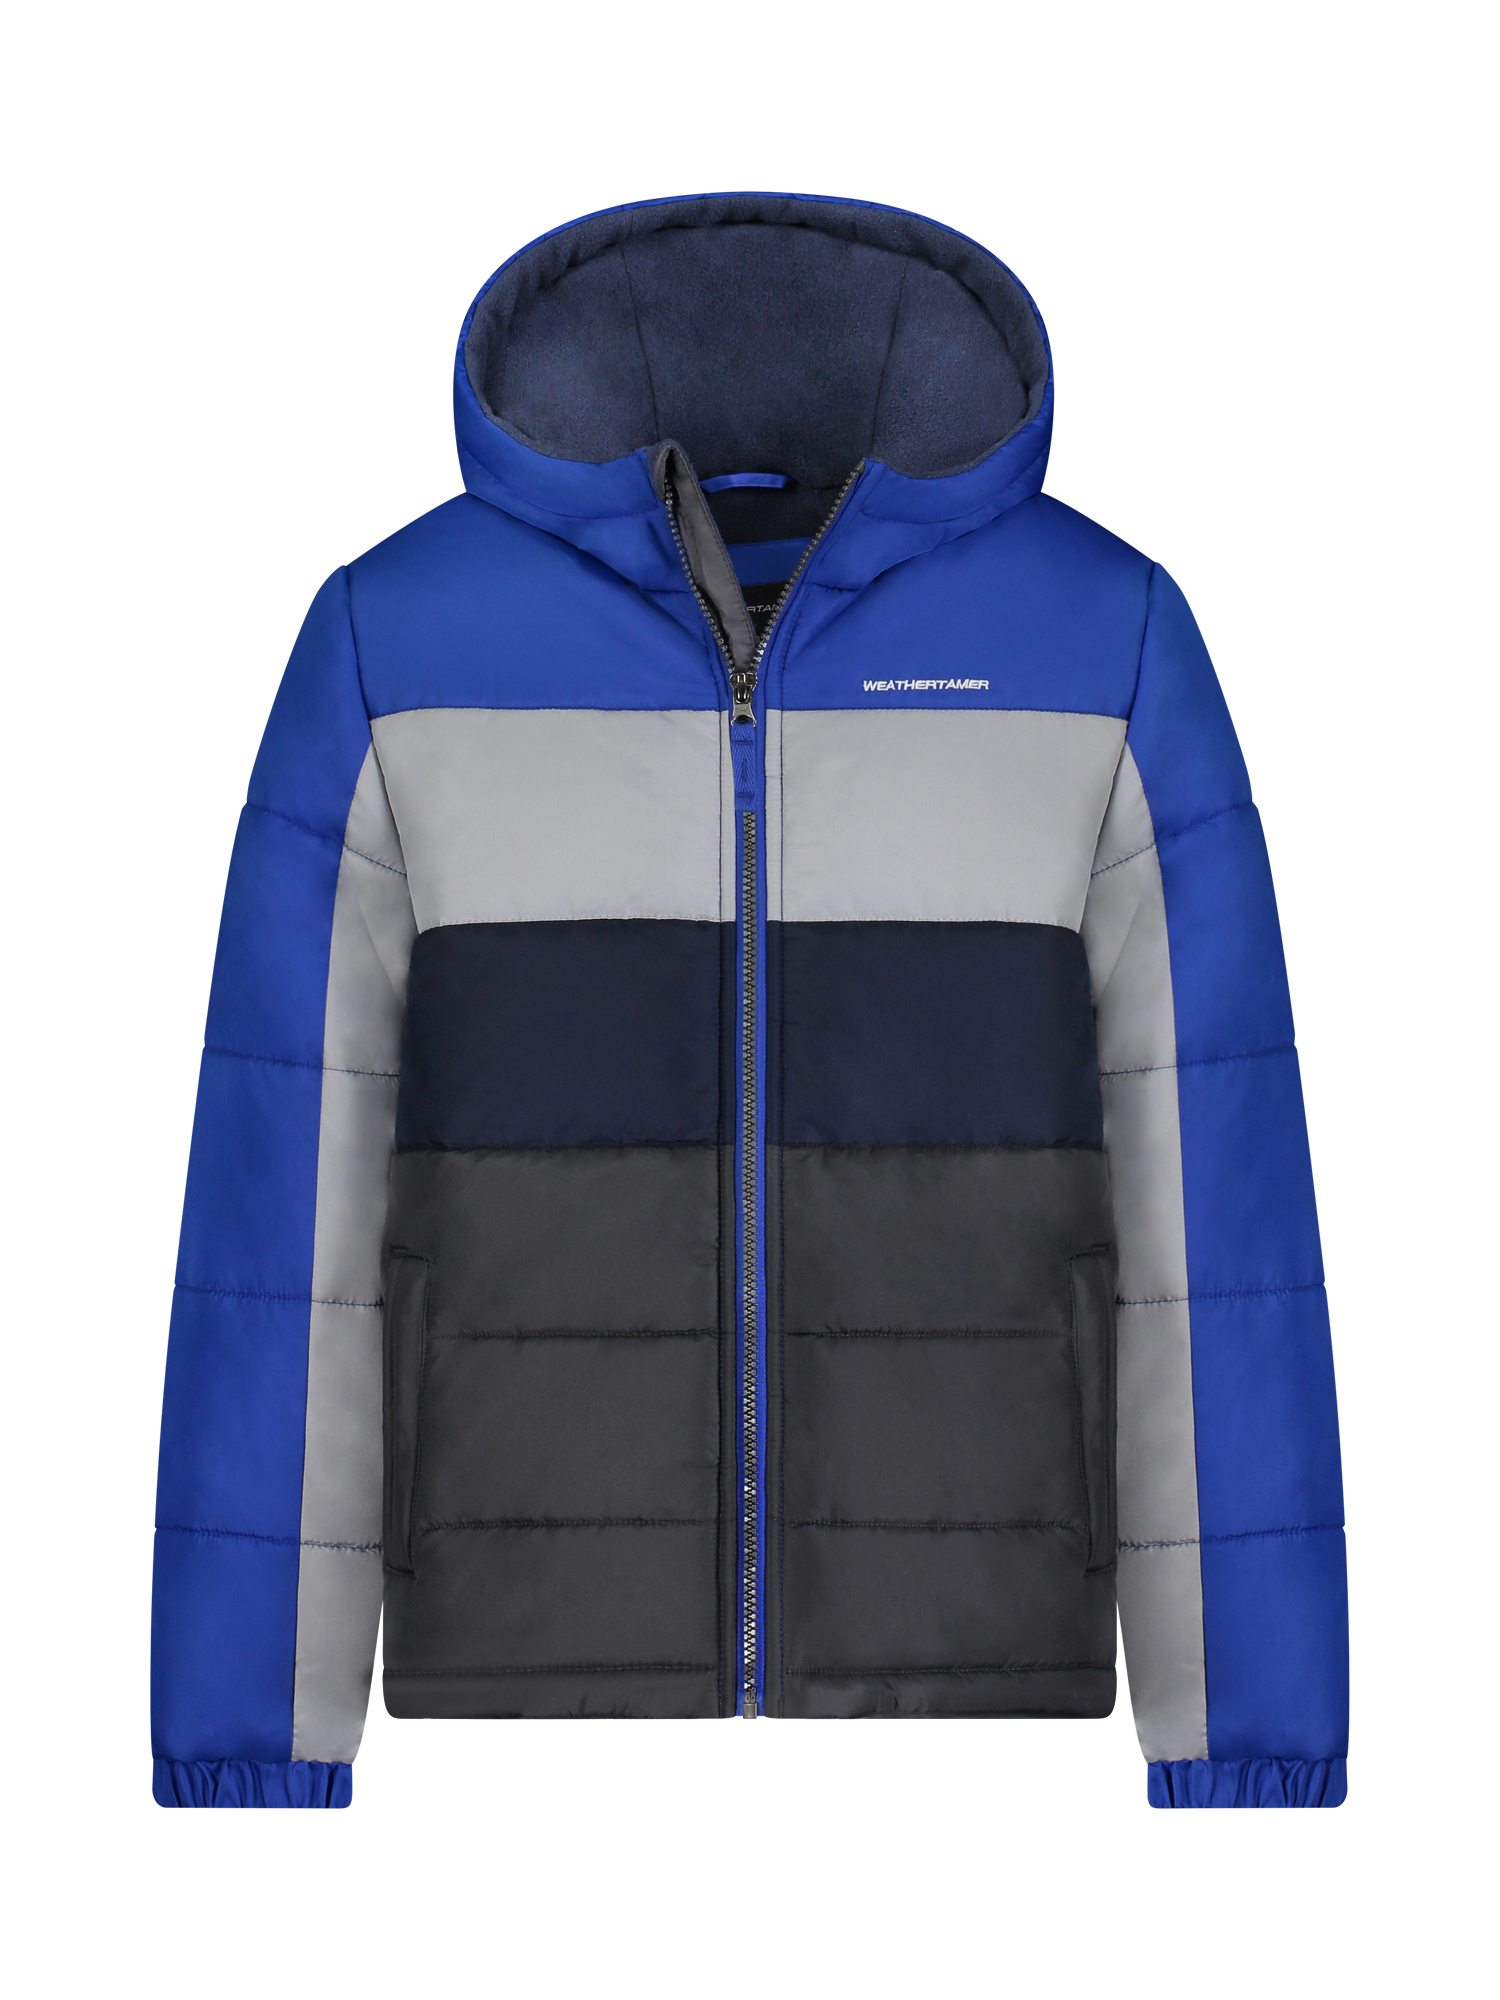 Weathertamer Boys Fleece Lined Puffer Jacket, Sizes 4-20 - image 1 of 2